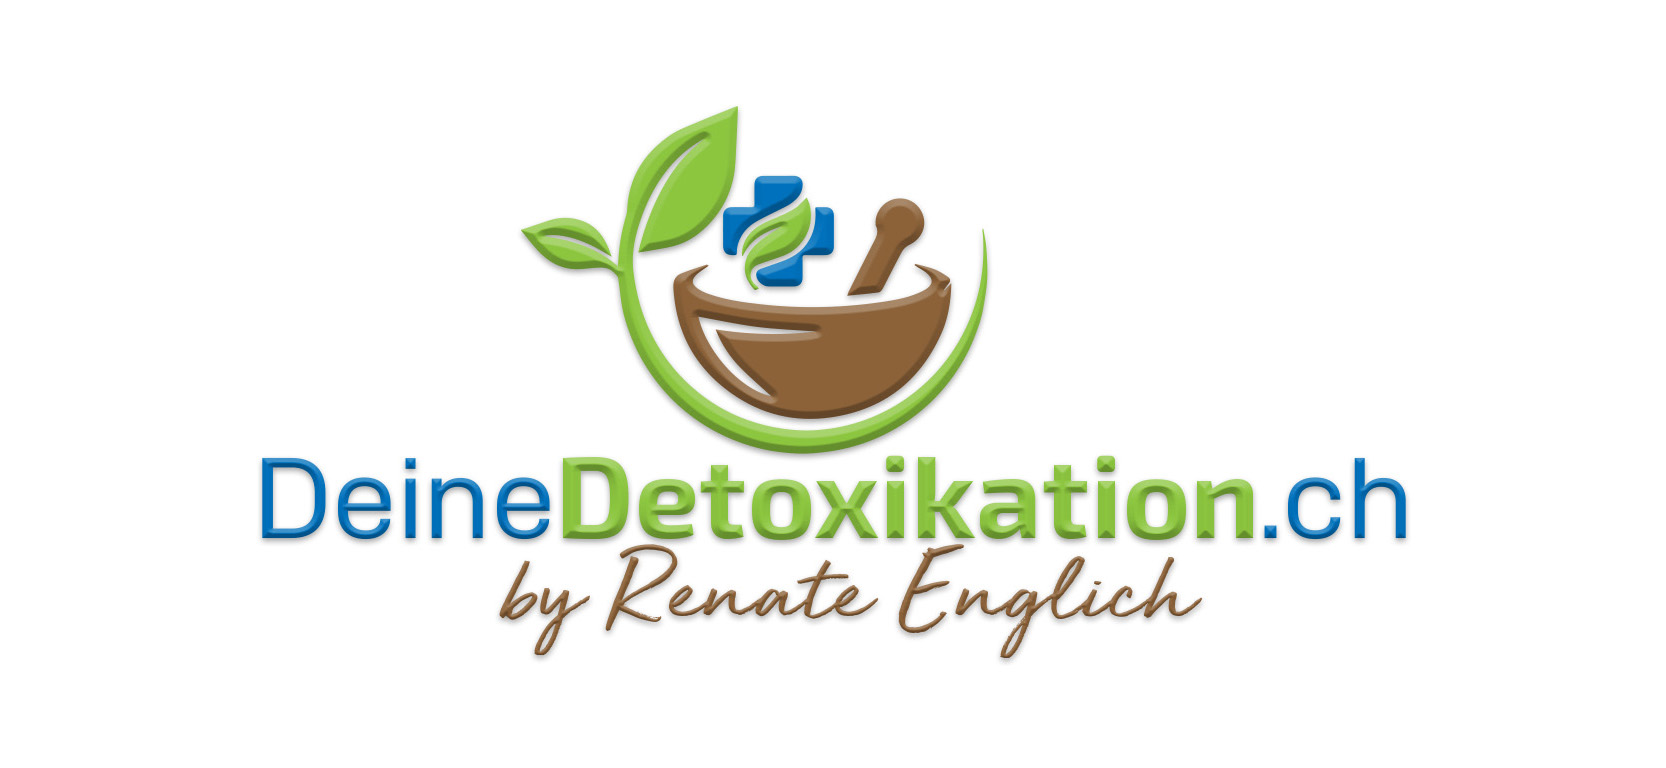 Detoxikation by Renate Englich